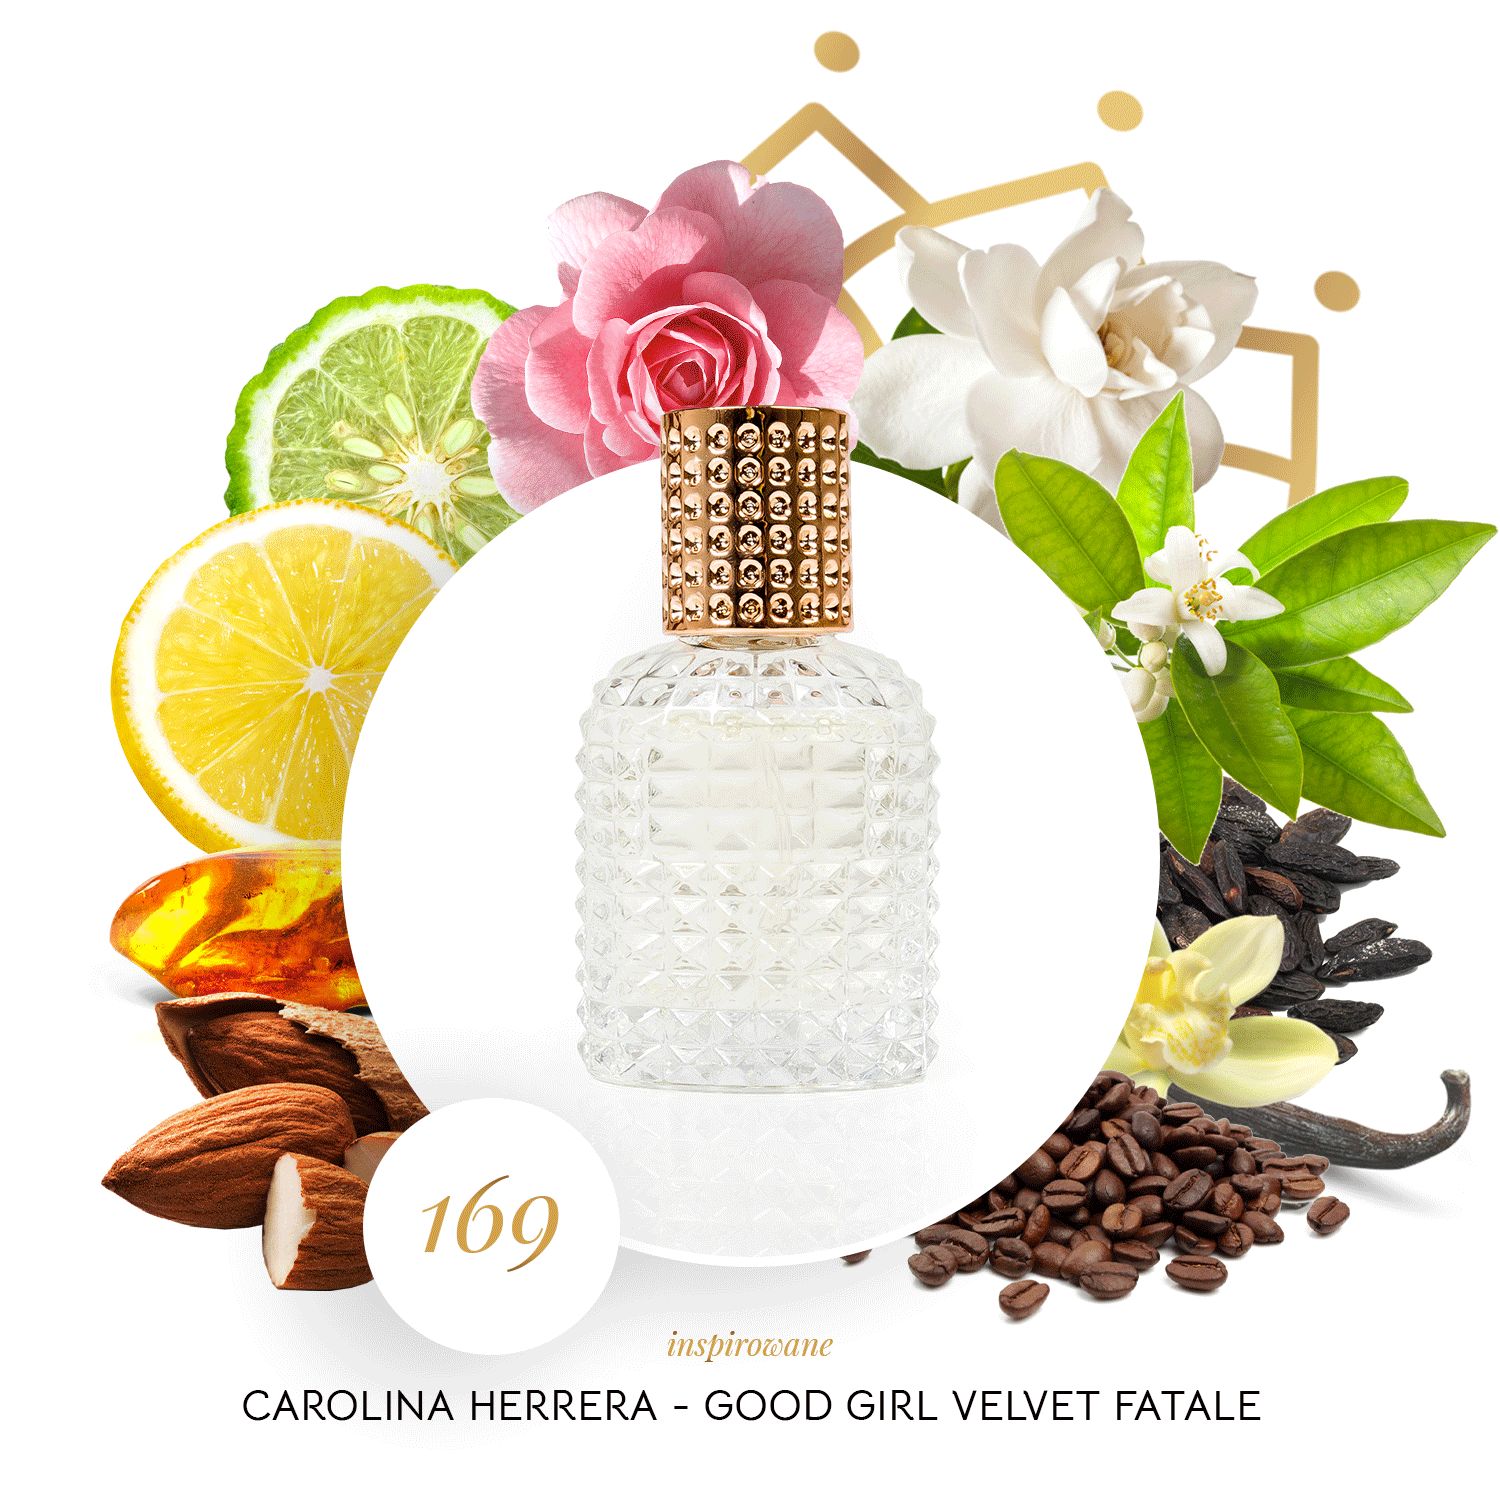 Perfumy 169 inspirowane Good Girl Velvet Fatale / C. Herrera-100 ml